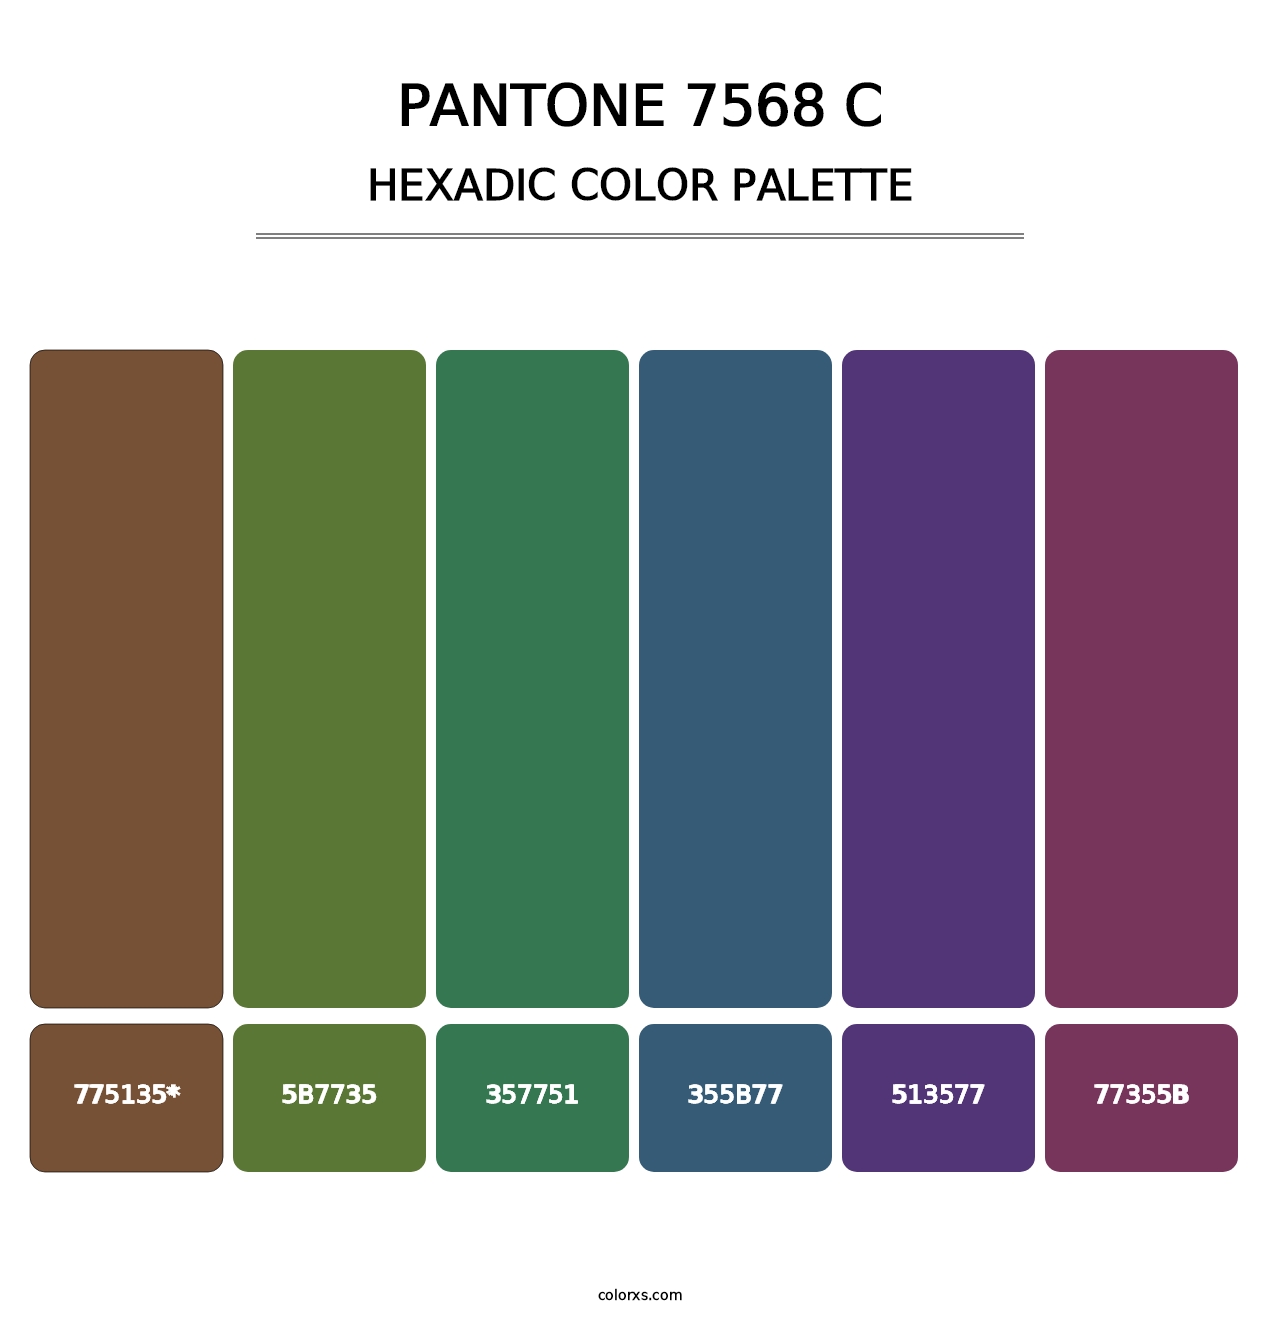 PANTONE 7568 C - Hexadic Color Palette